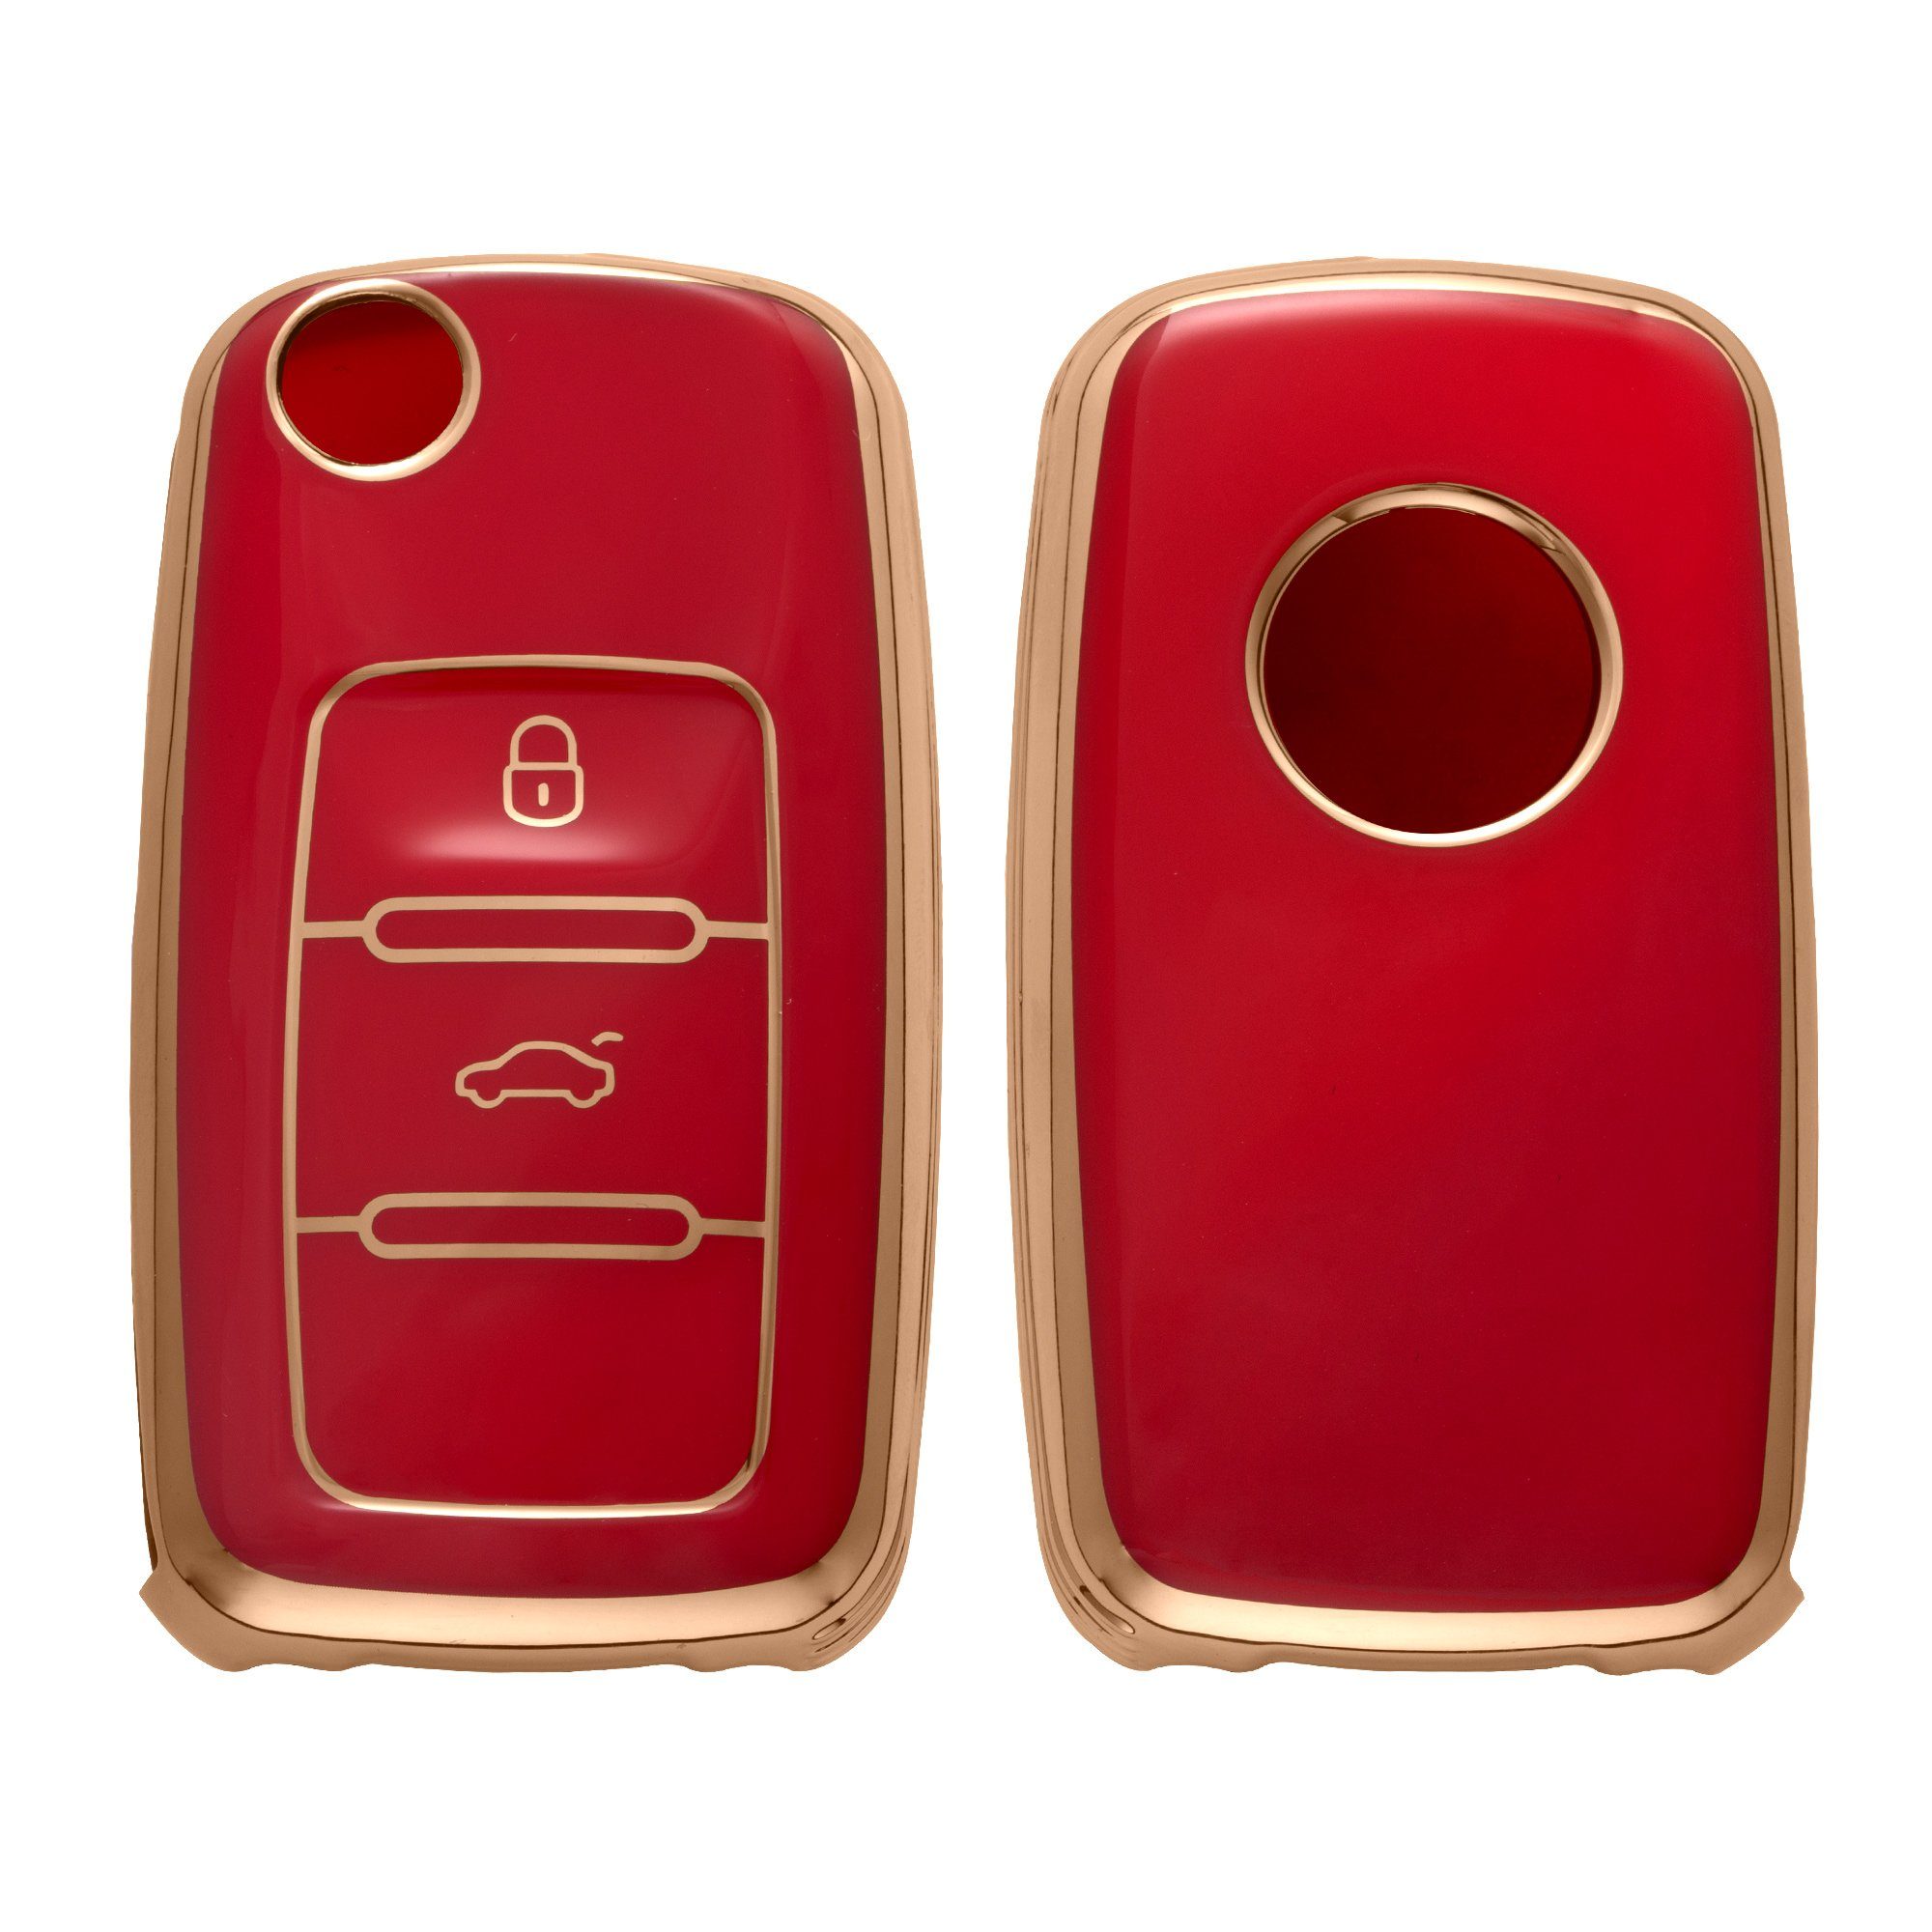 kwmobile Schlüsseltasche Autoschlüssel Skoda Rot Schlüsselhülle Hülle für Silikon Cover Seat, VW